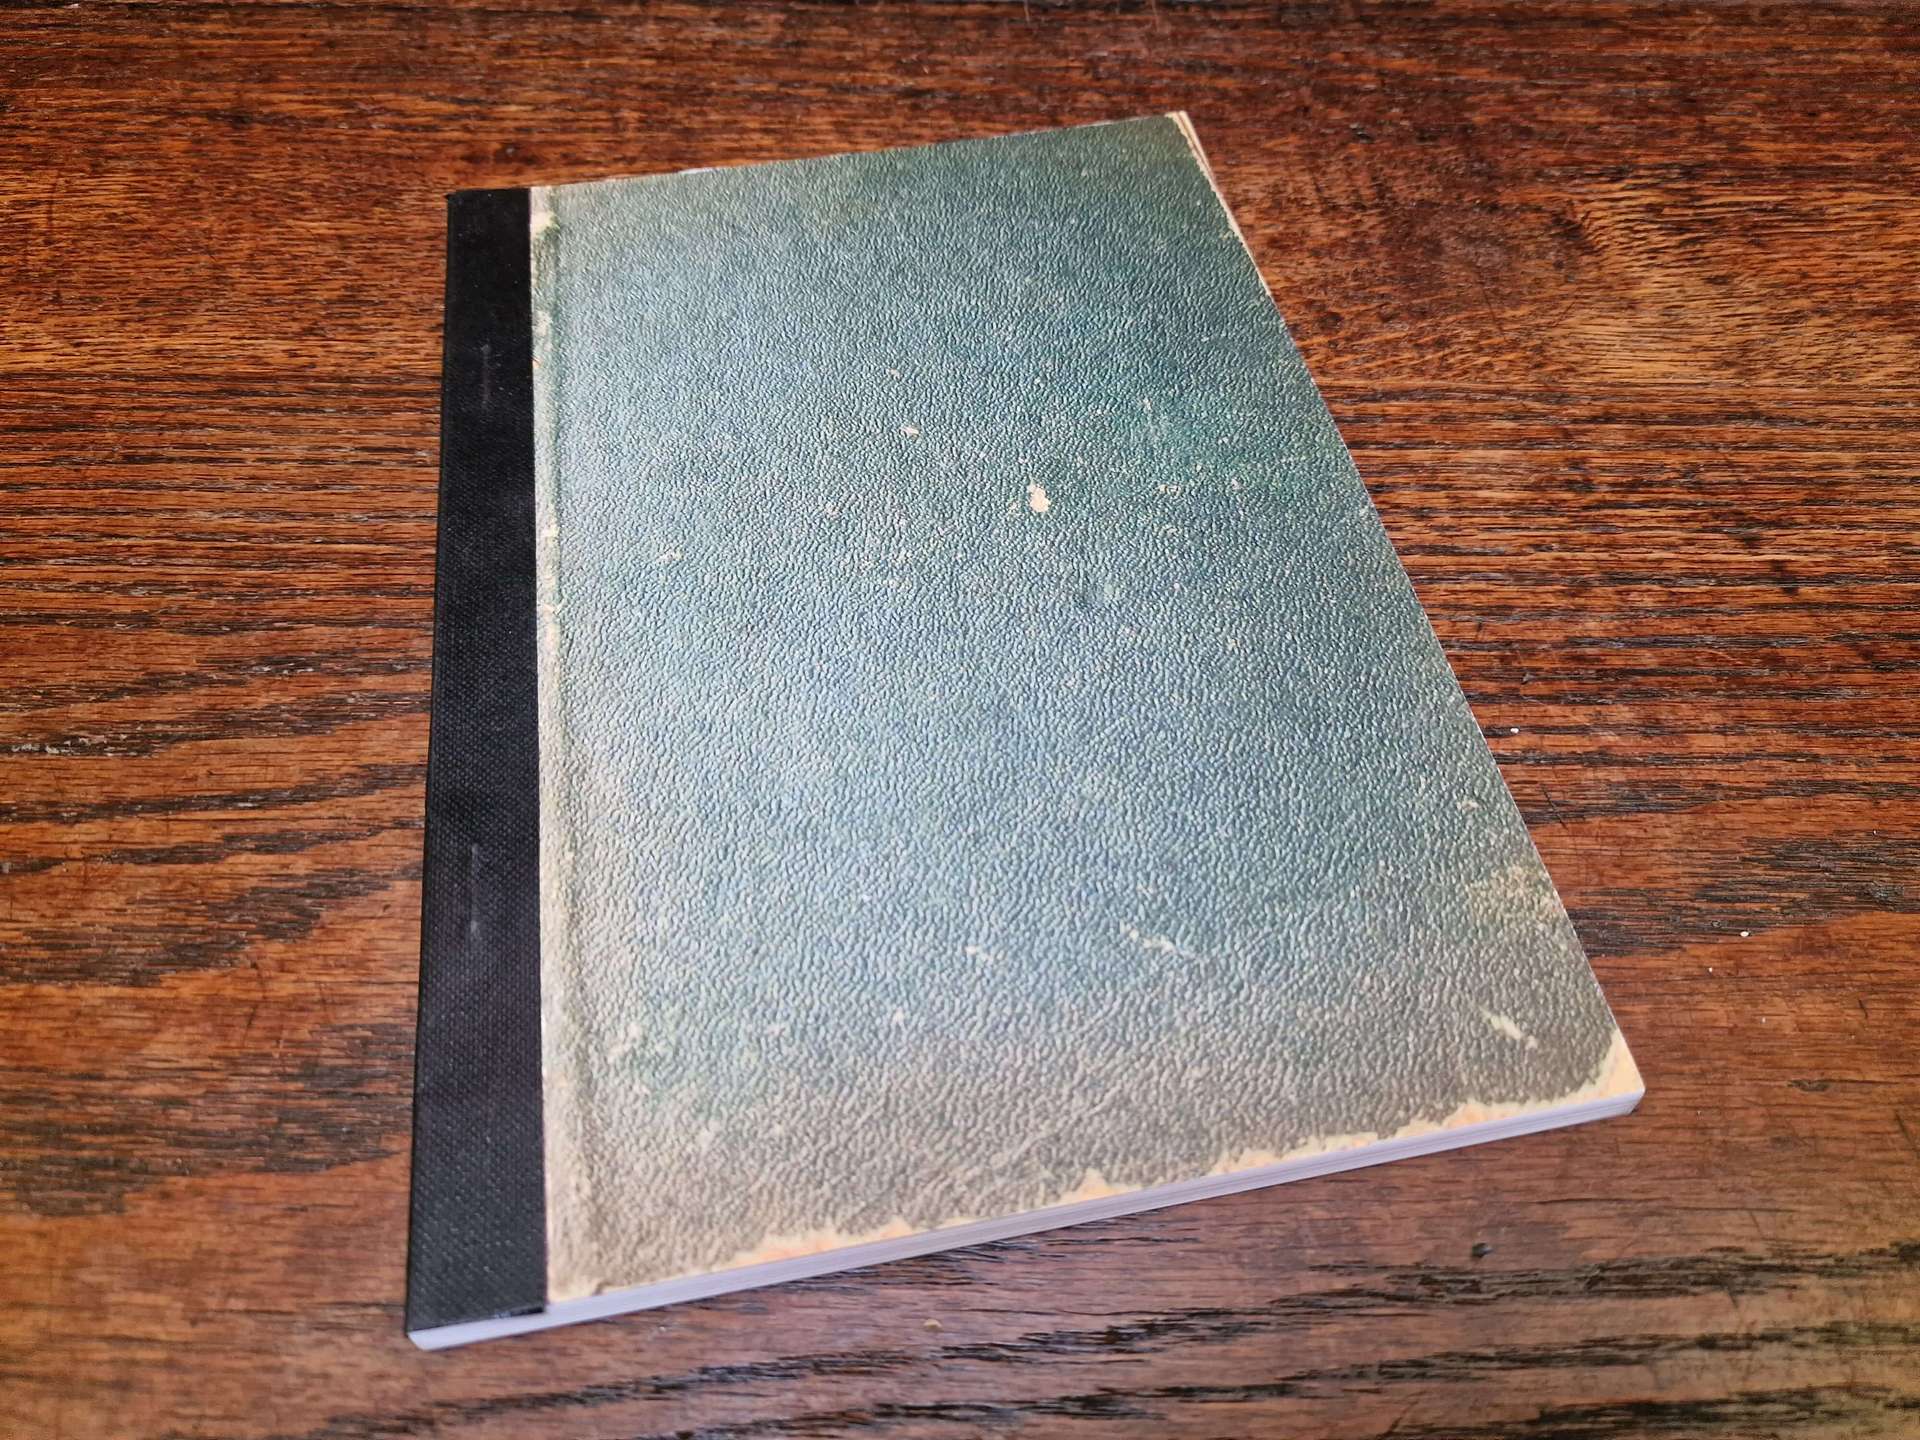 Facsimile of Wainwrights Notebook